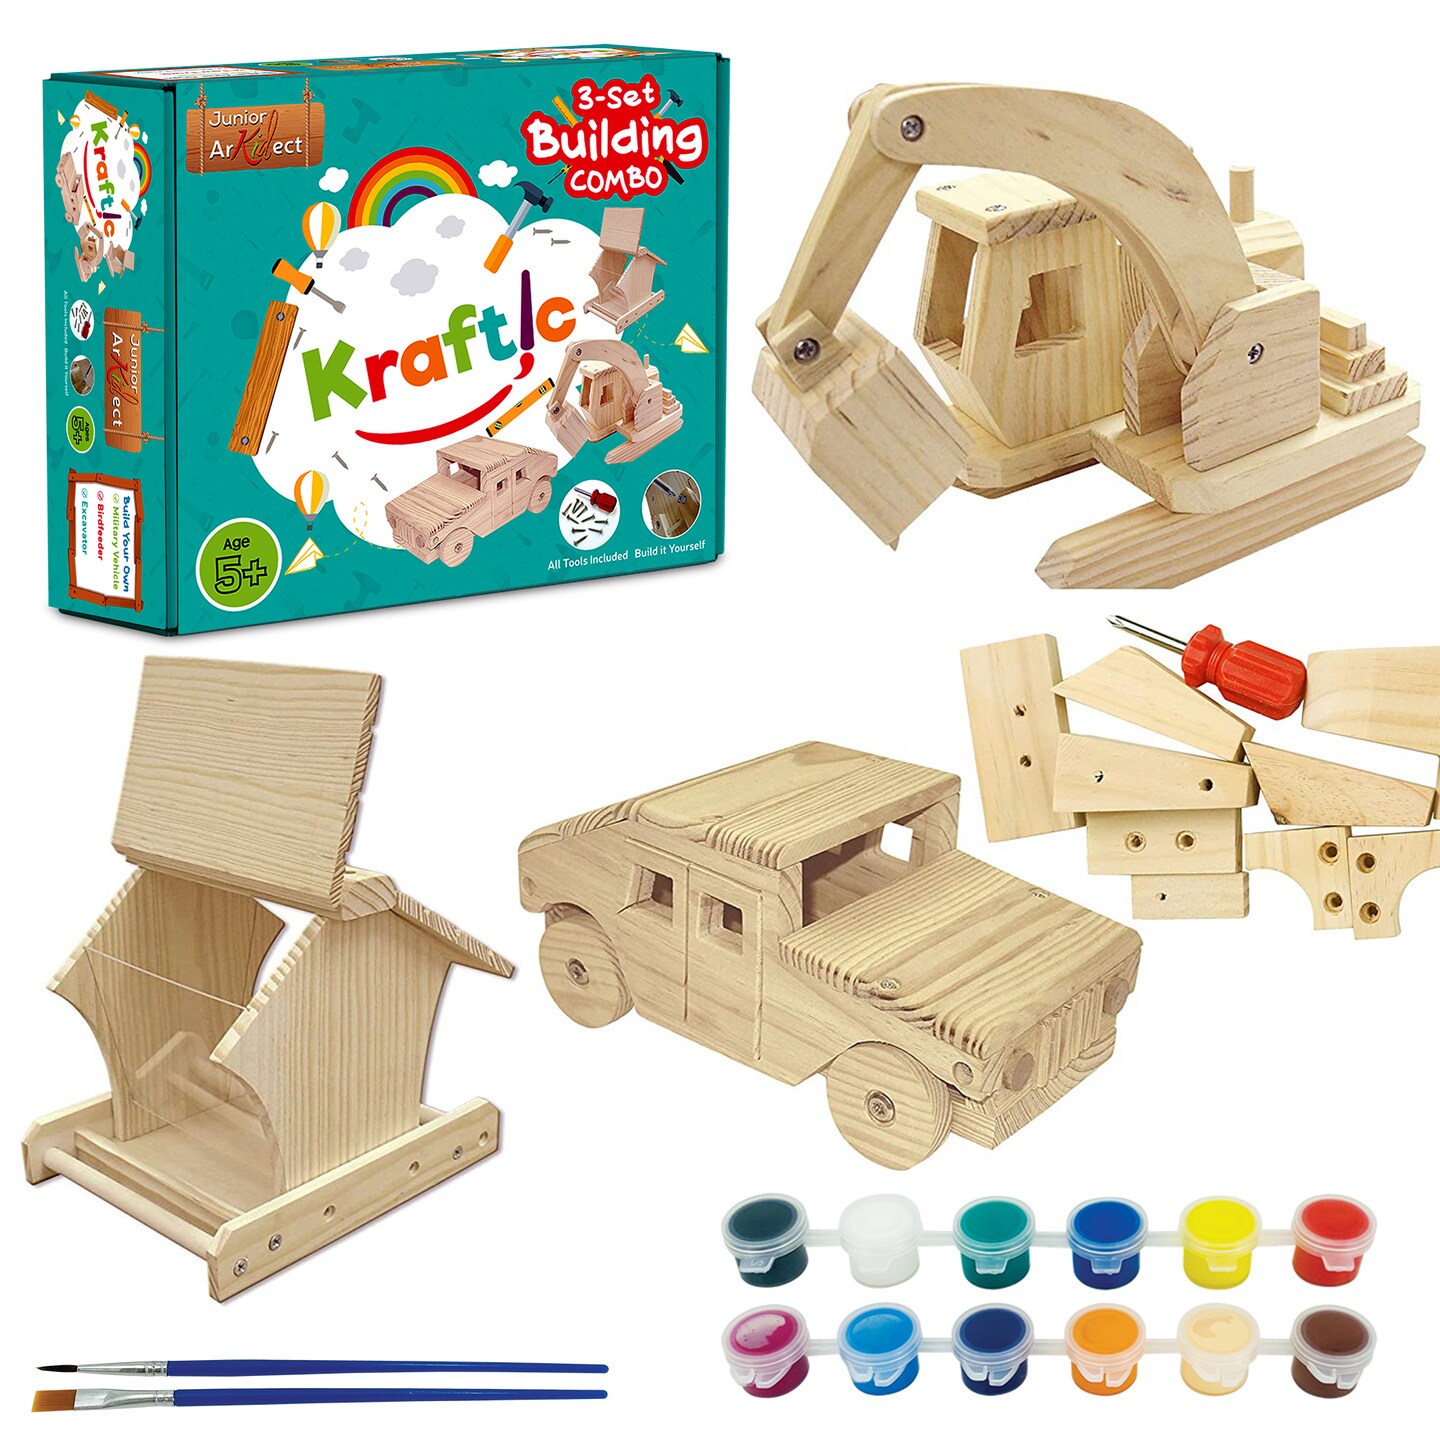  Kraftic: Craft Sets